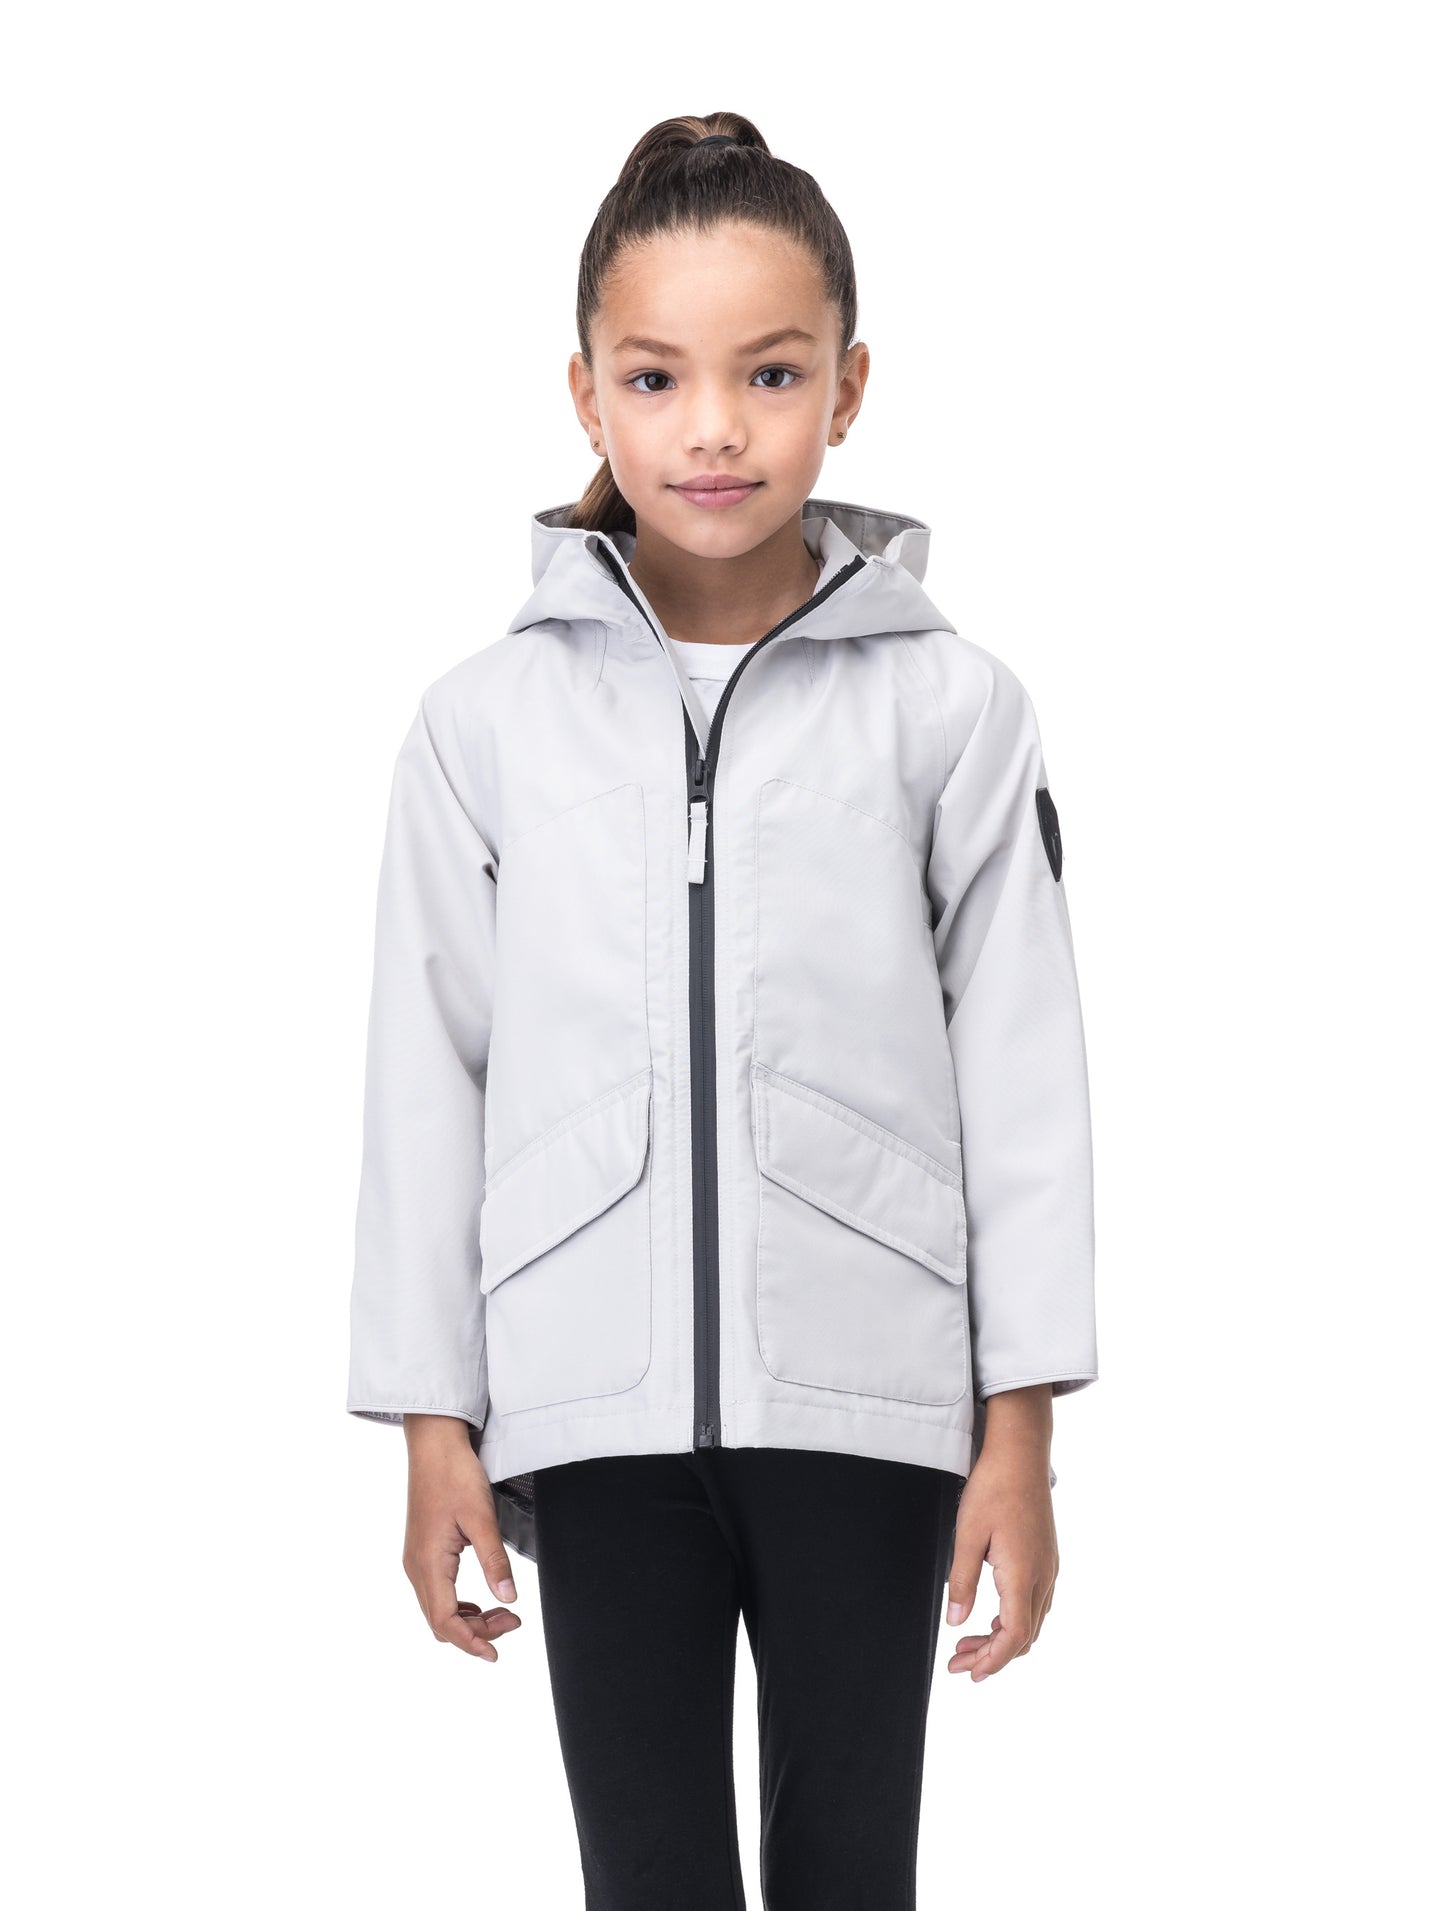 Kid's hip length fishtail rain jacket with hood in Light Grey